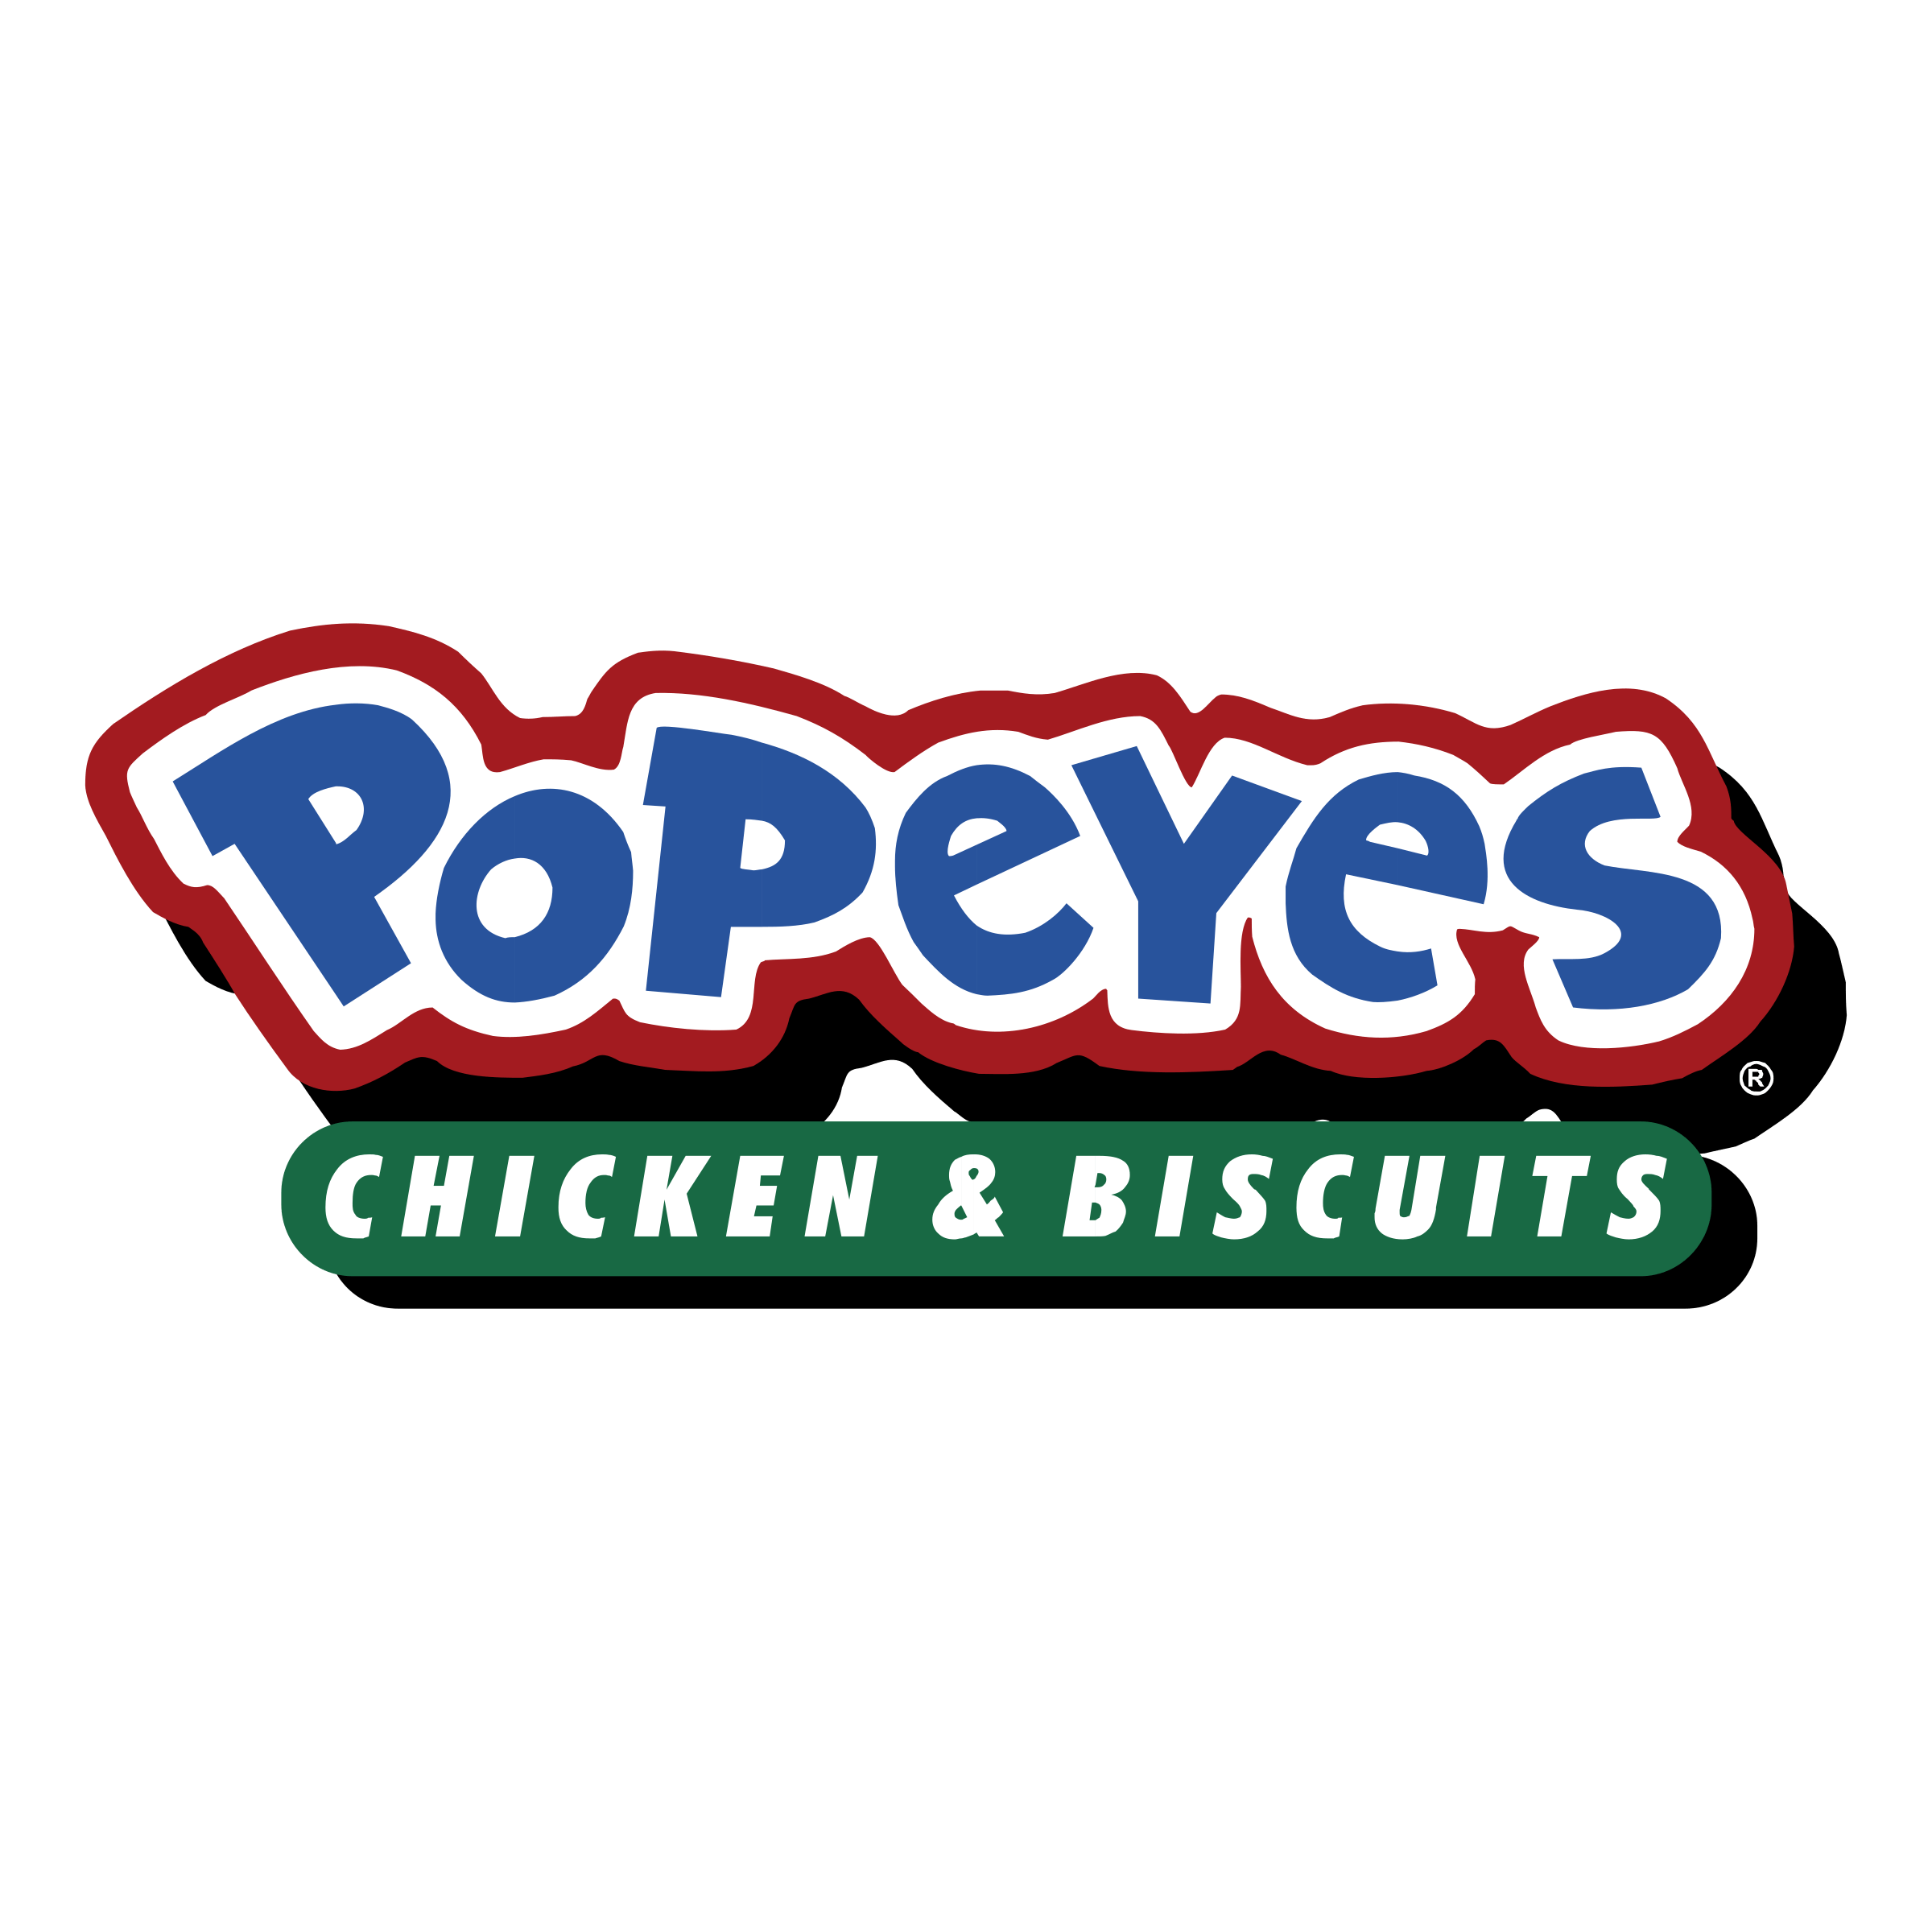 Popeyes Logo - Popeyes Logo PNG Transparent & SVG Vector - Freebie Supply